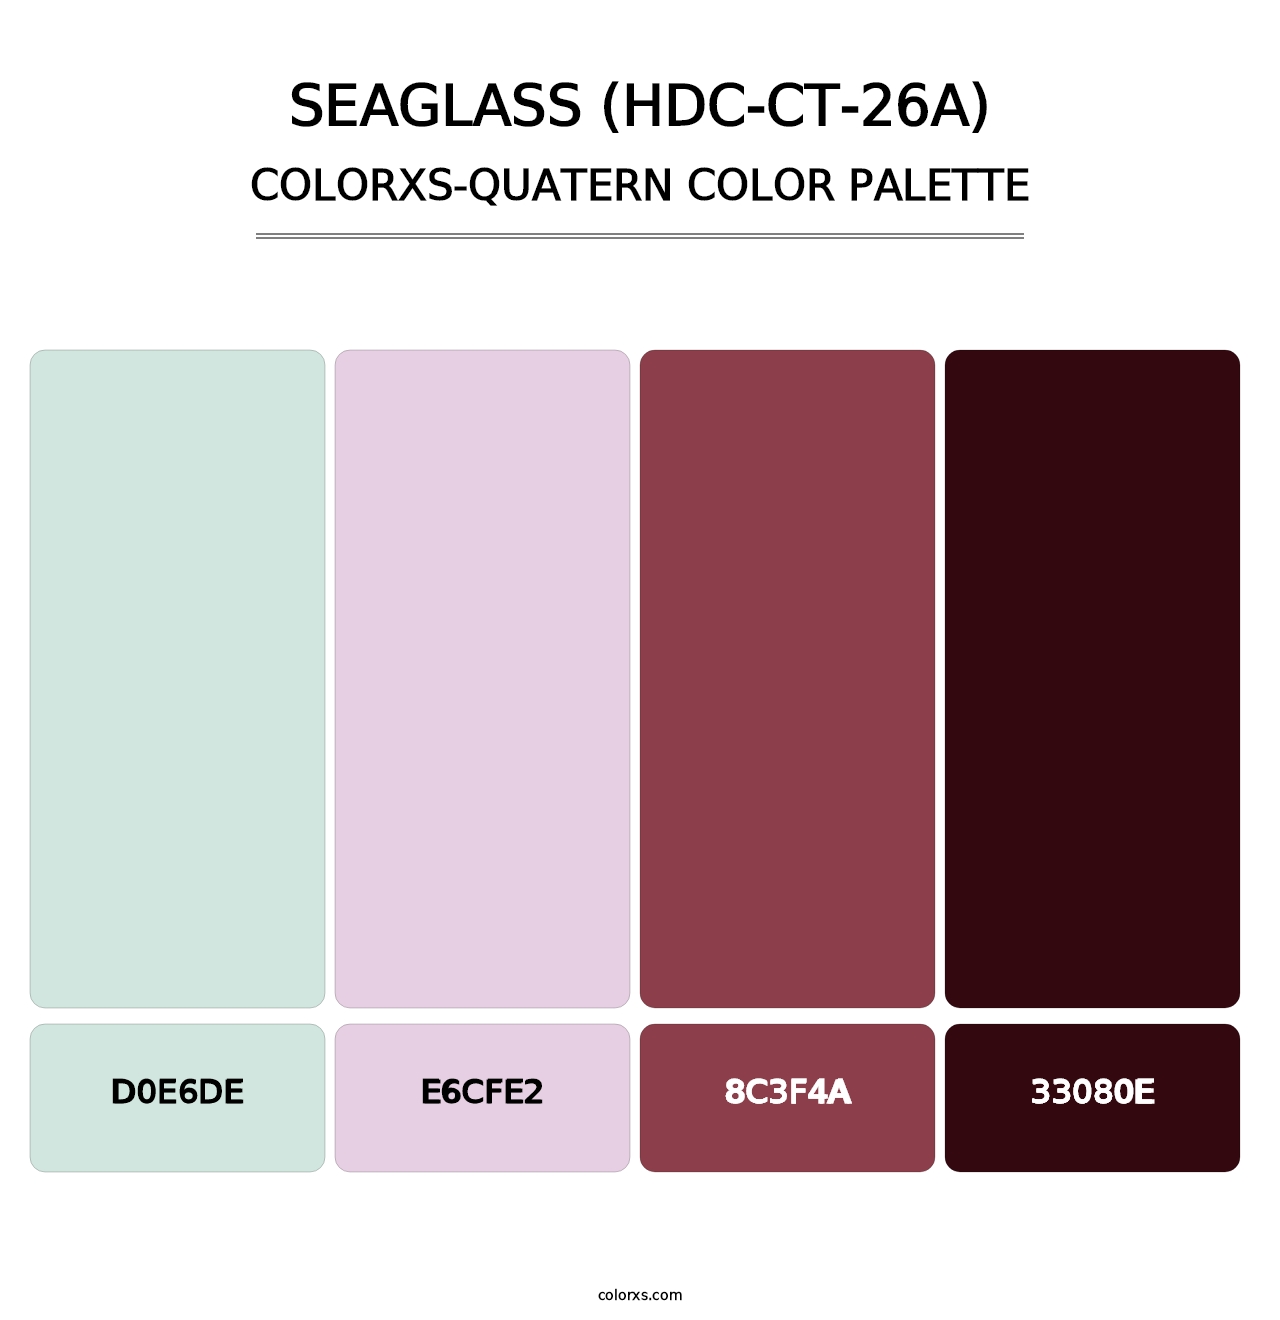 Seaglass (HDC-CT-26A) - Colorxs Quatern Palette